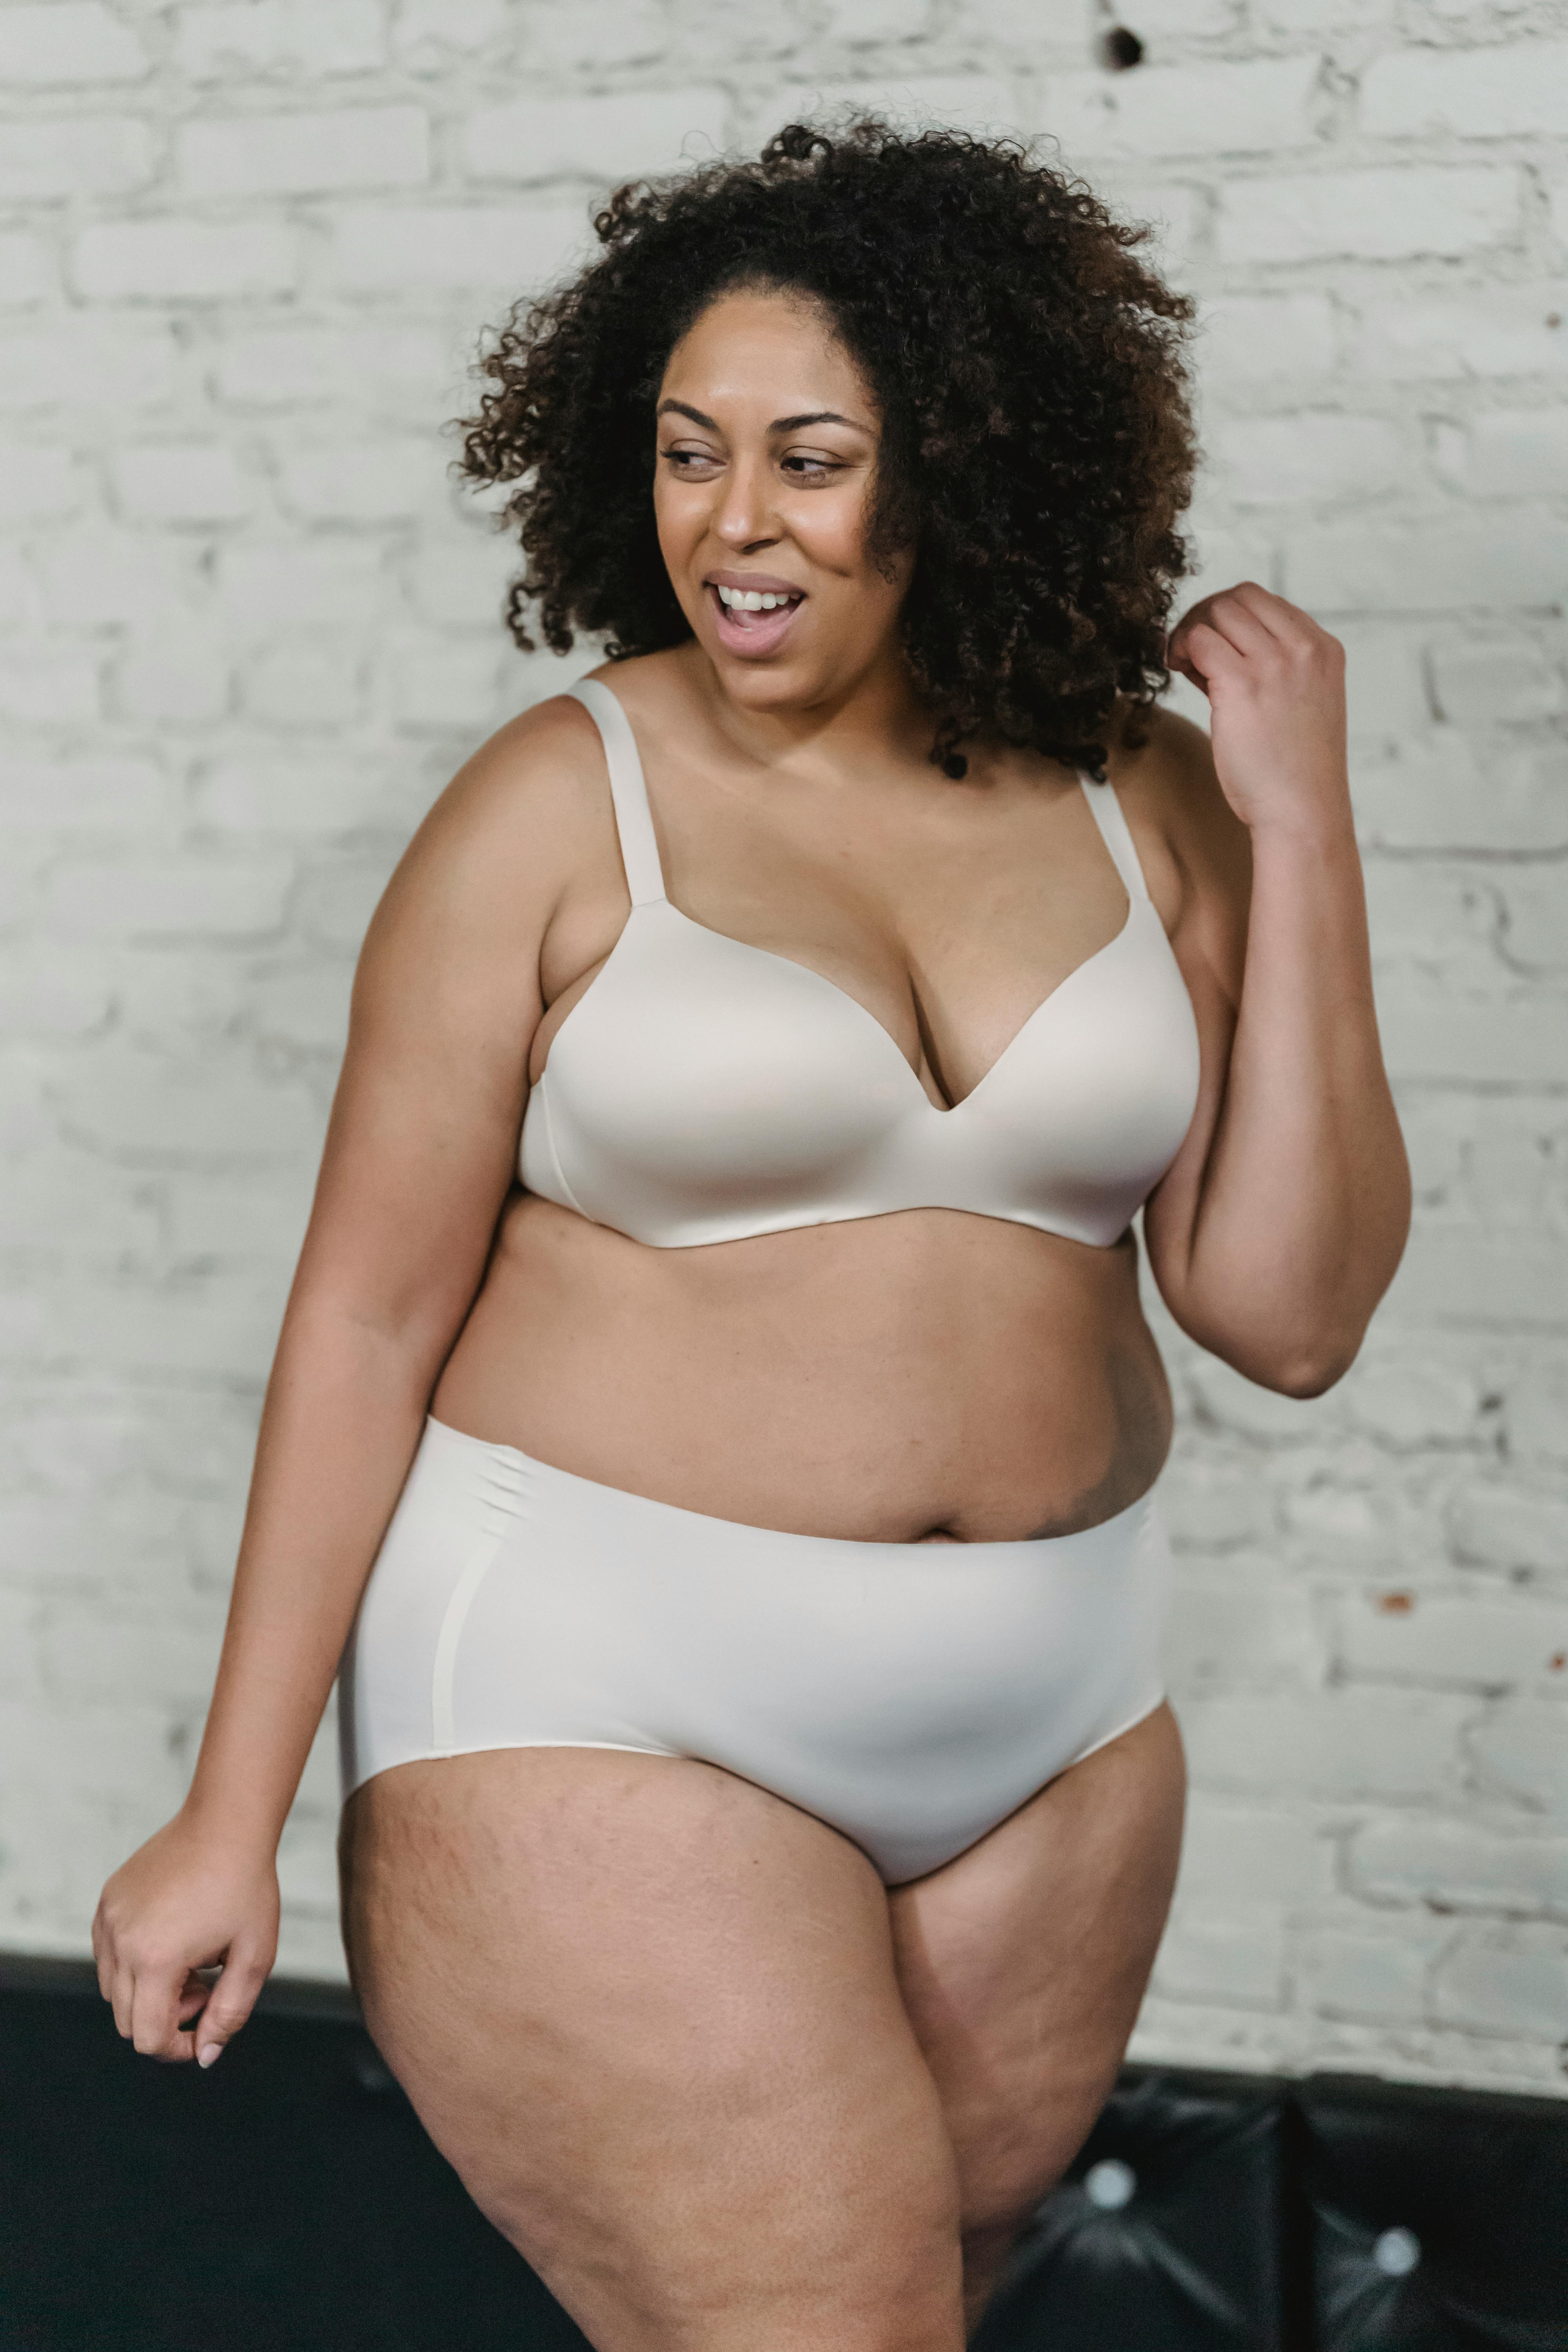 Plus size lingerie photoshoot: Bringing the Confidence